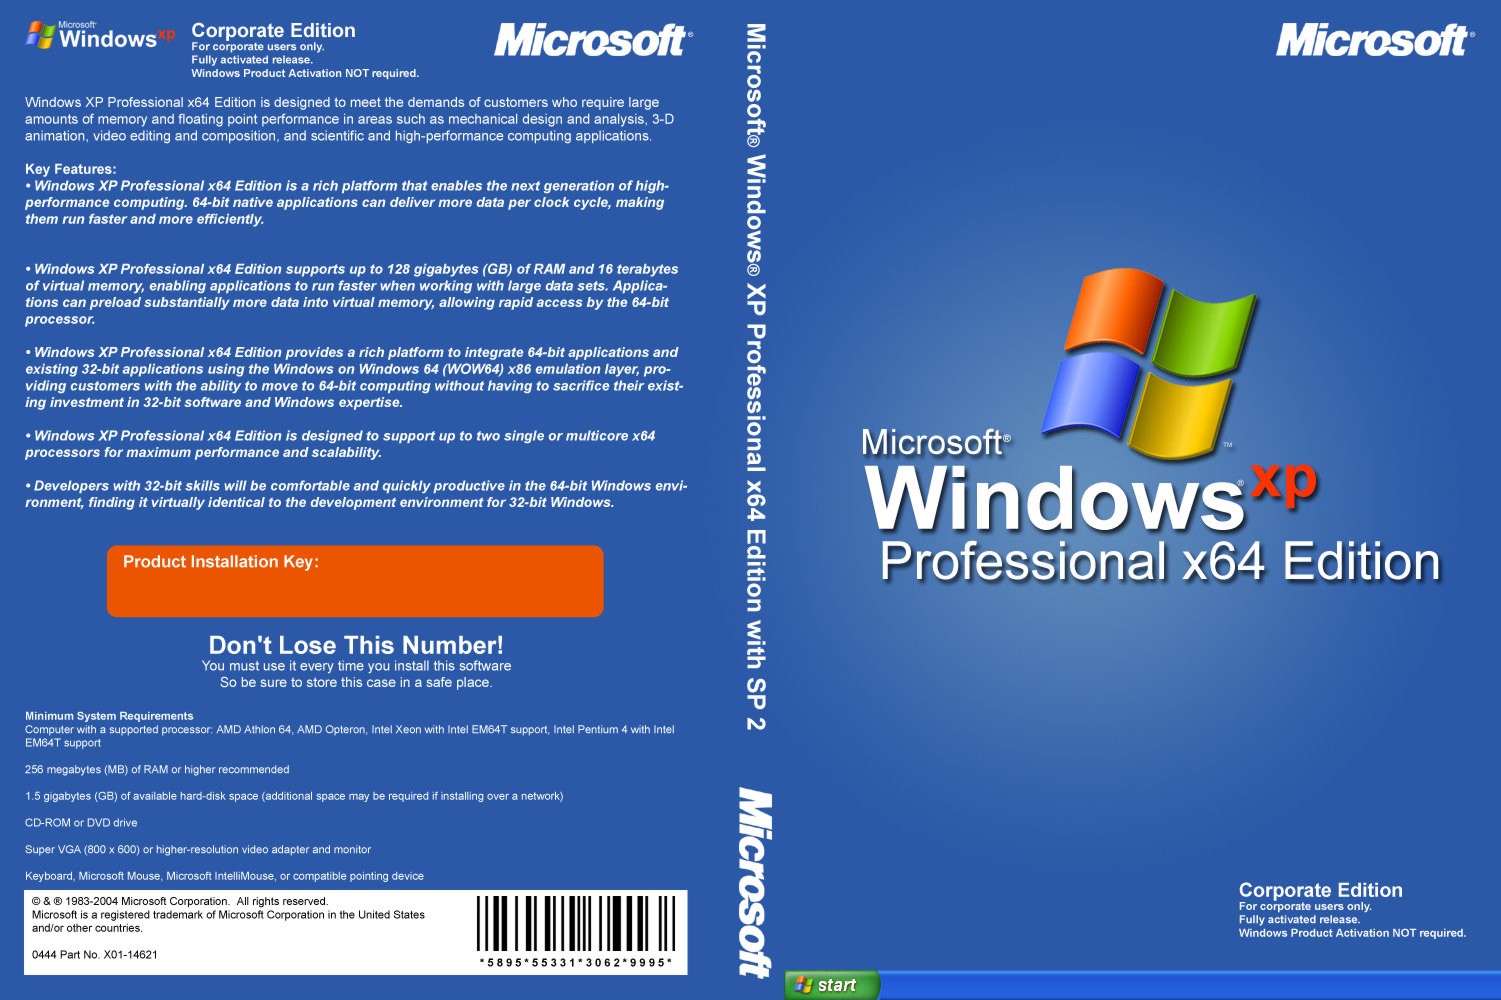 windows embedded standard service pack 1